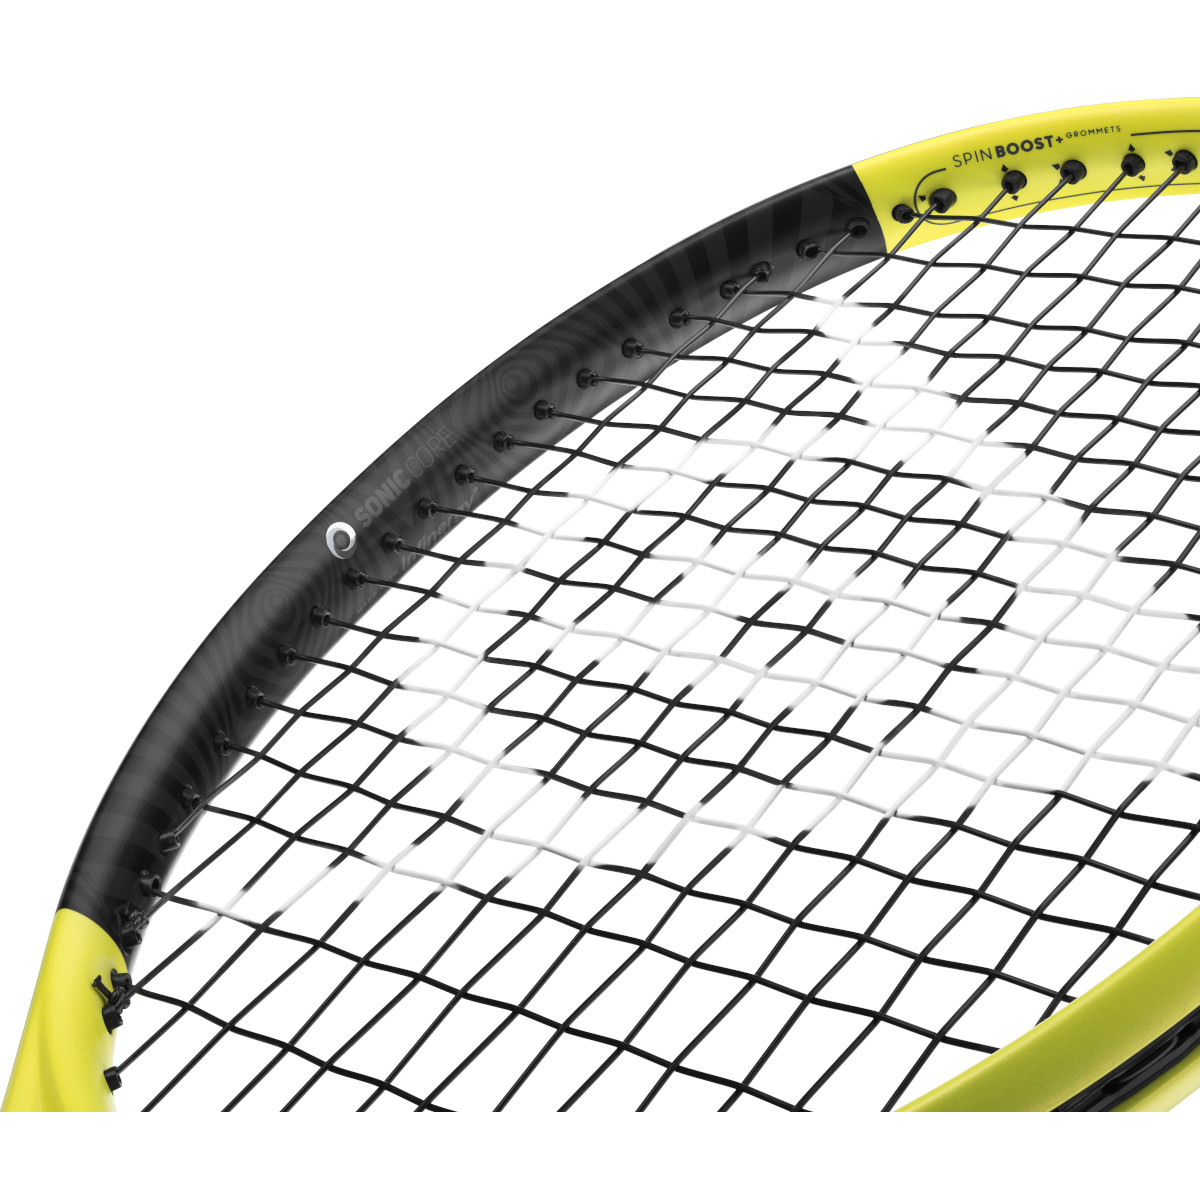 Comprar Raquetero Tenis Dunlop SX Perfomance 8 Raquetas Amarillo